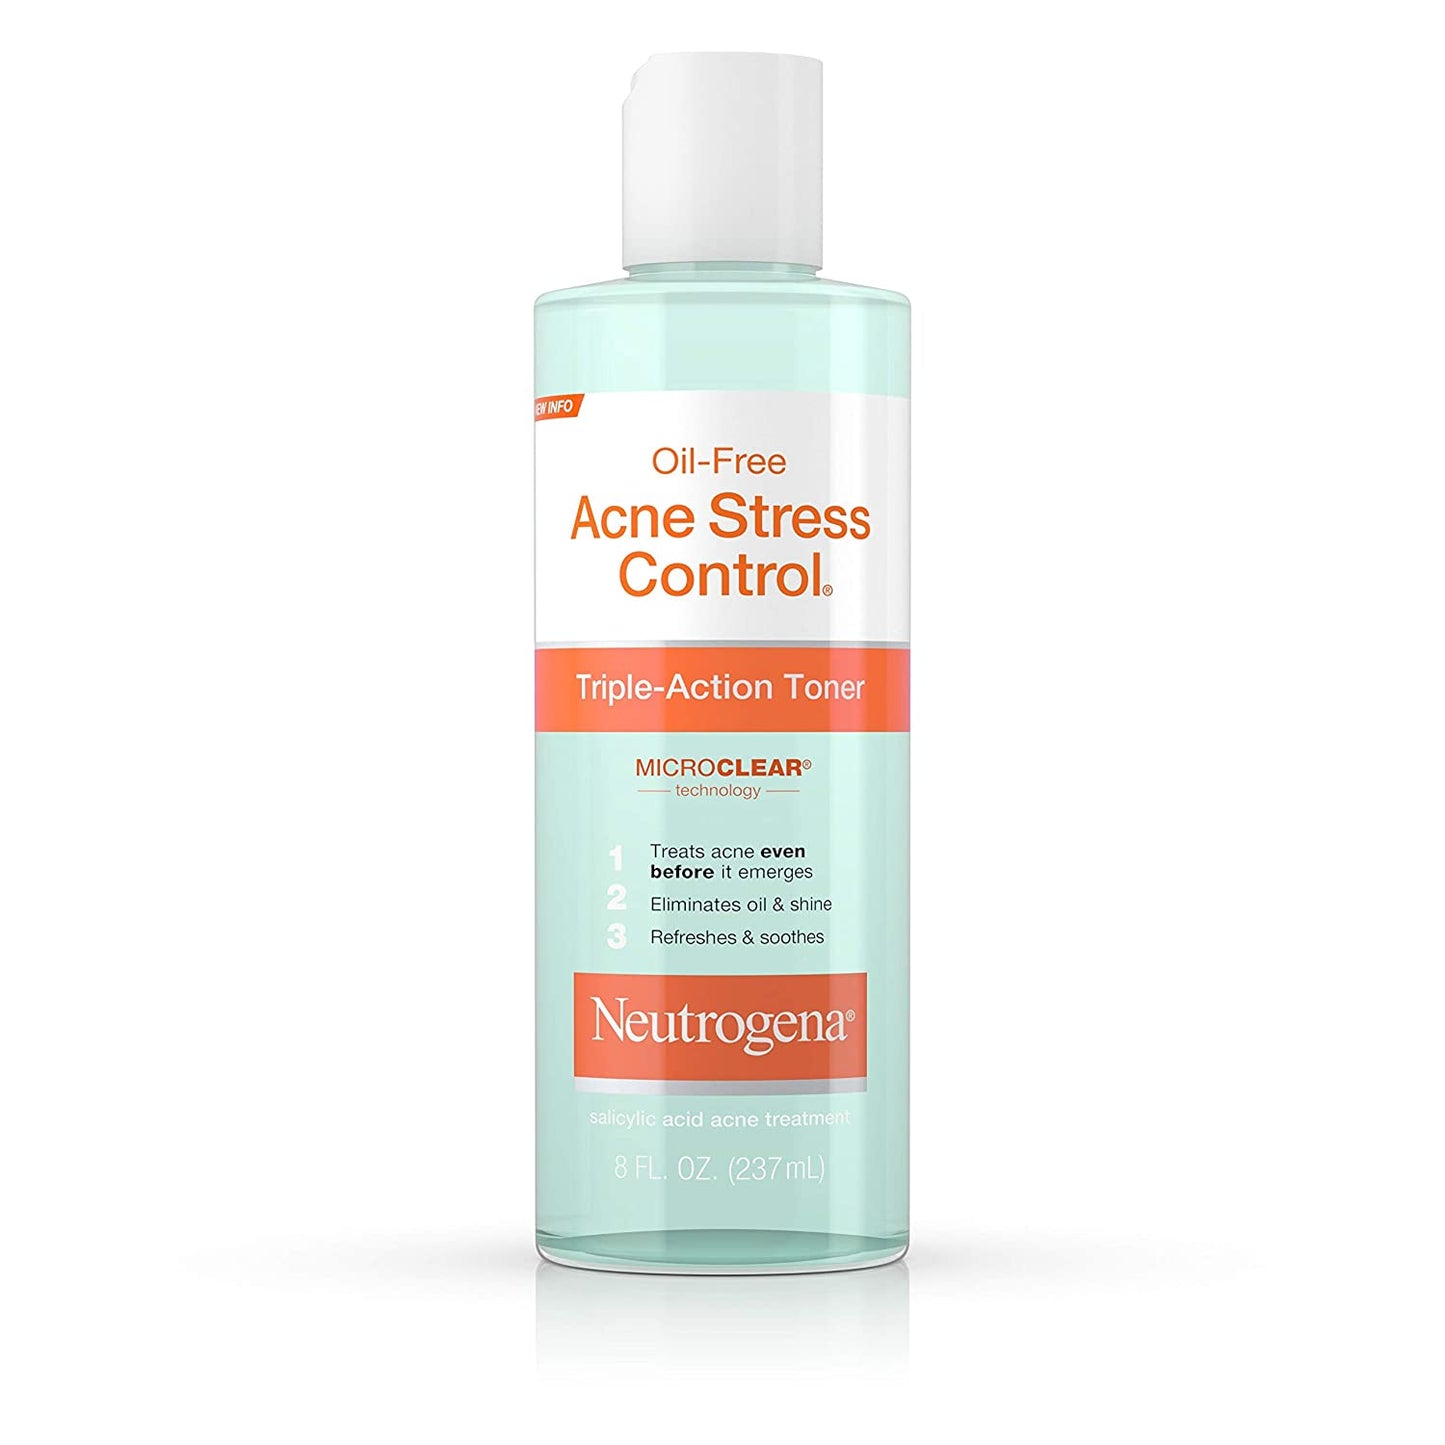 Neutrogena Oil Free Acne Stress Control Triple Action Toner, 8 fl oz / 237 ml